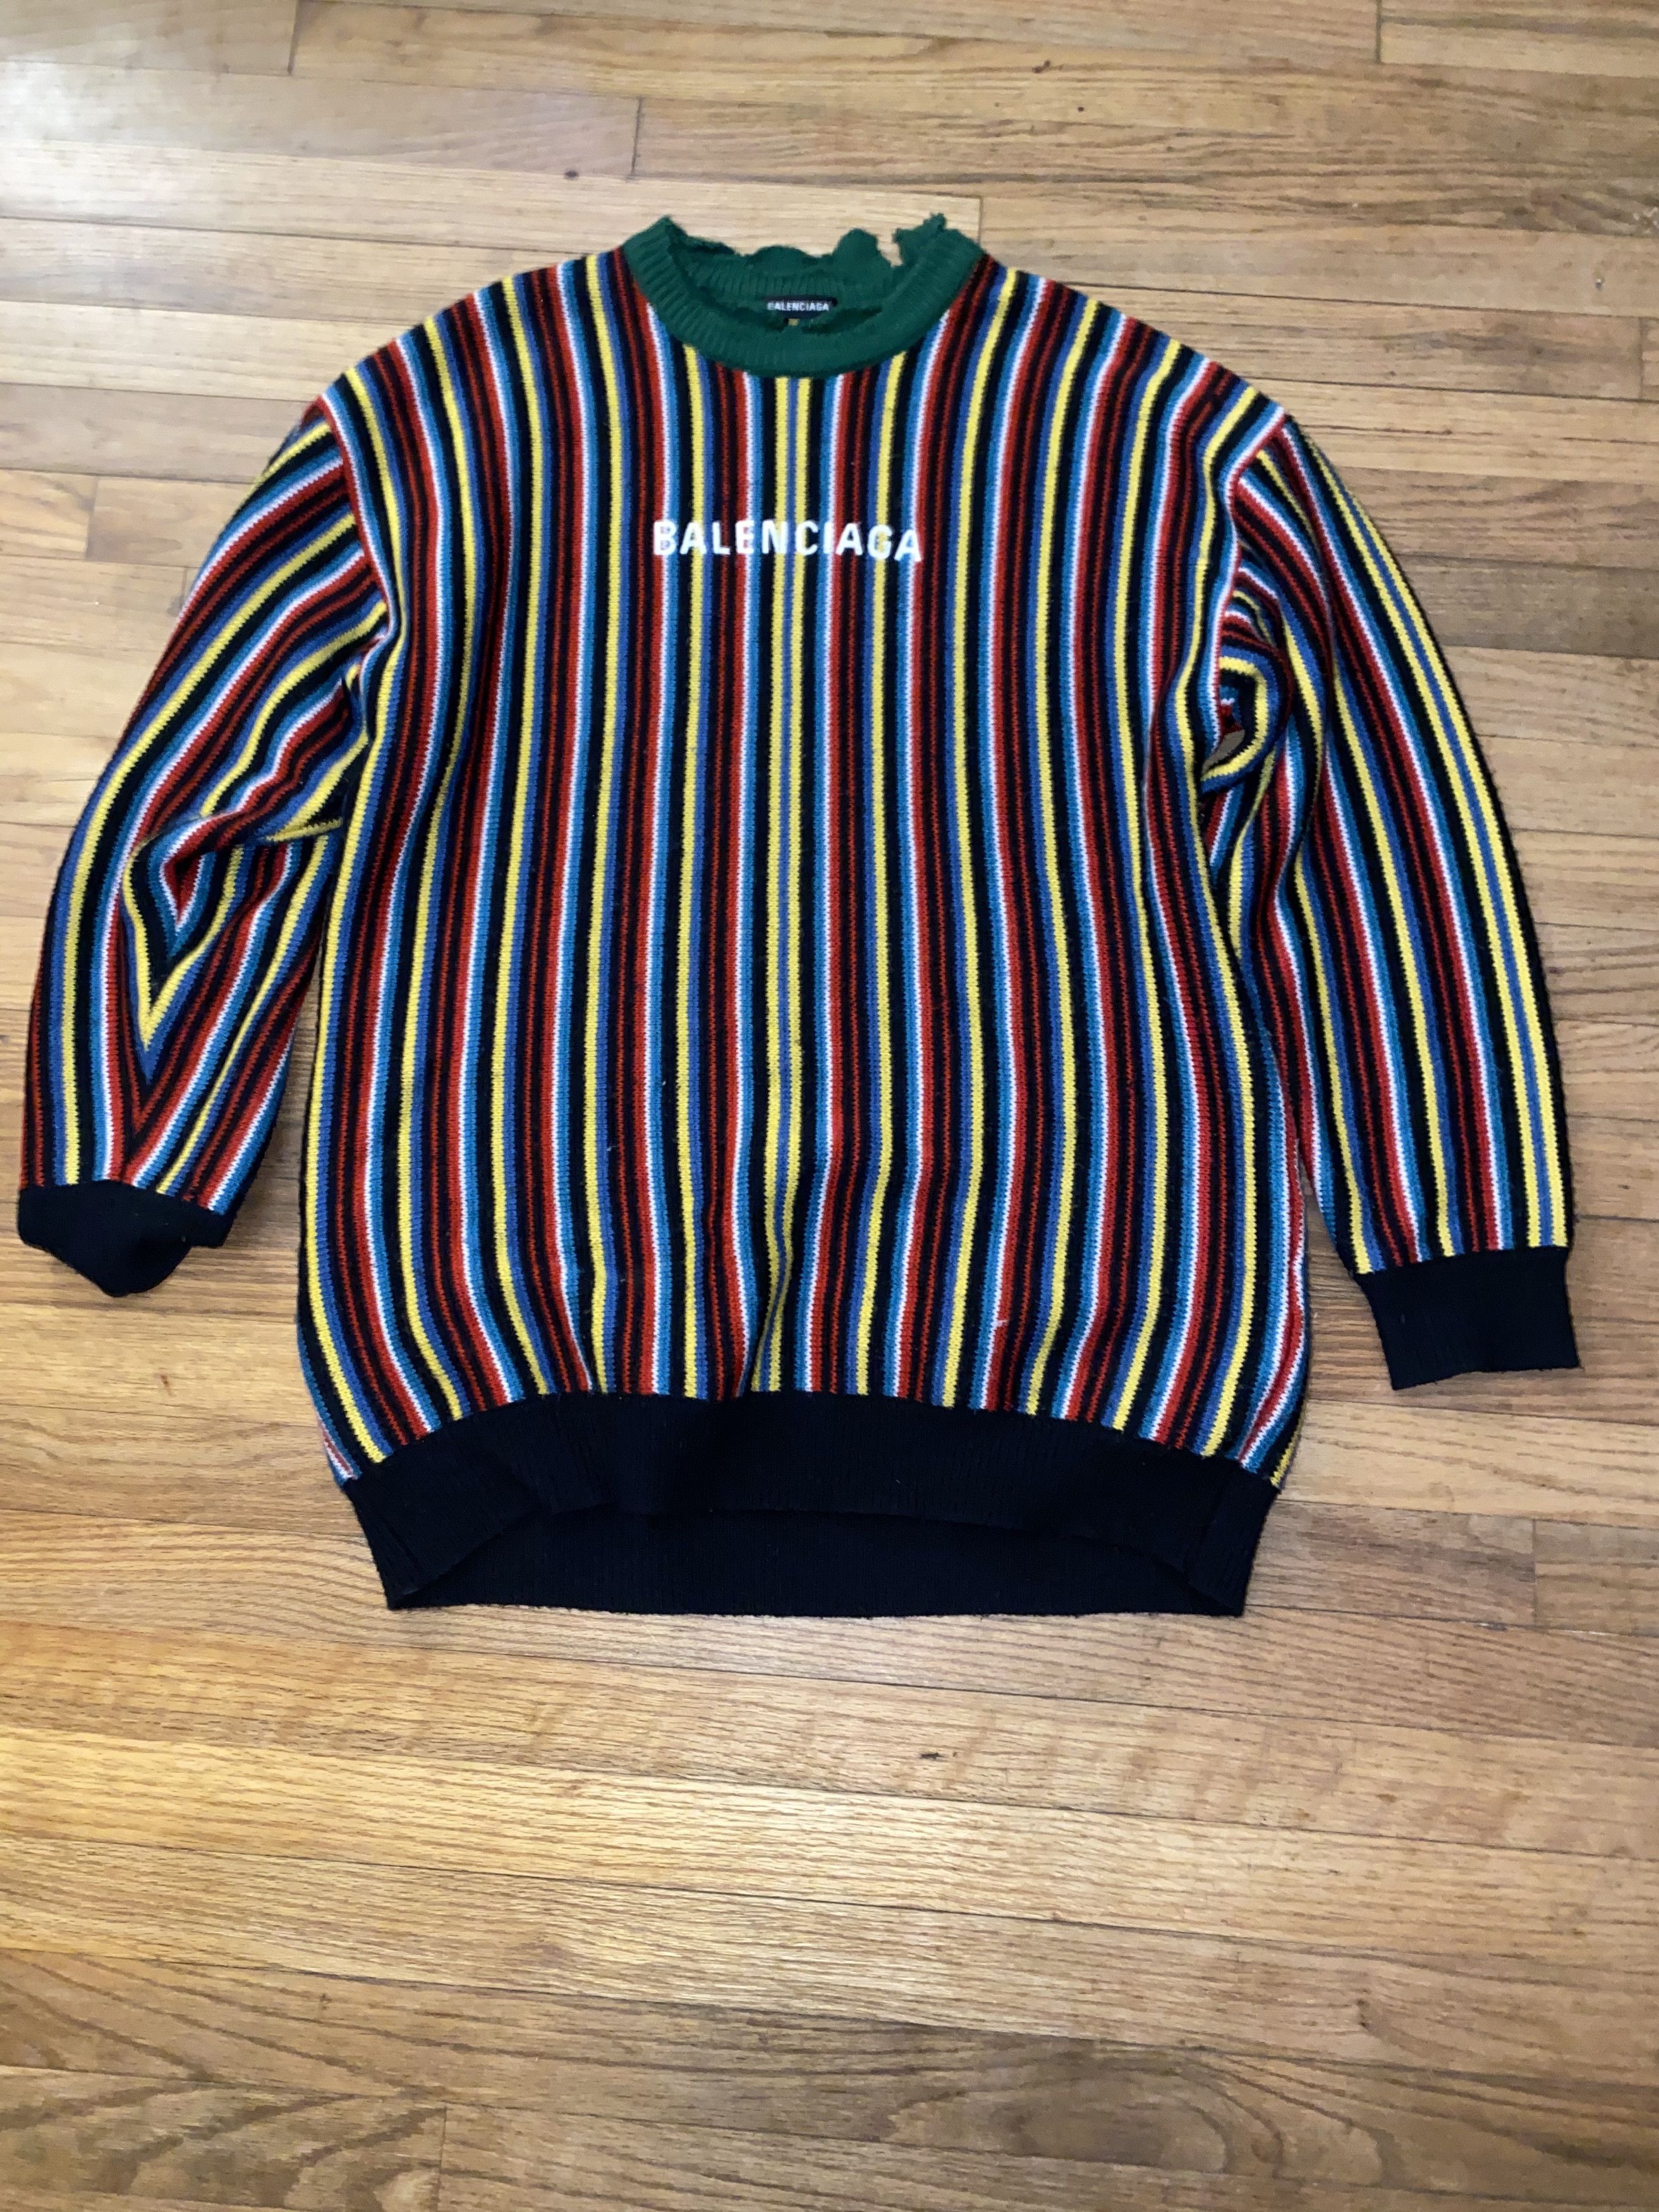 Balenciaga Sweater Multicolor Stripe Crew Neck Knit Acrylic Grailed